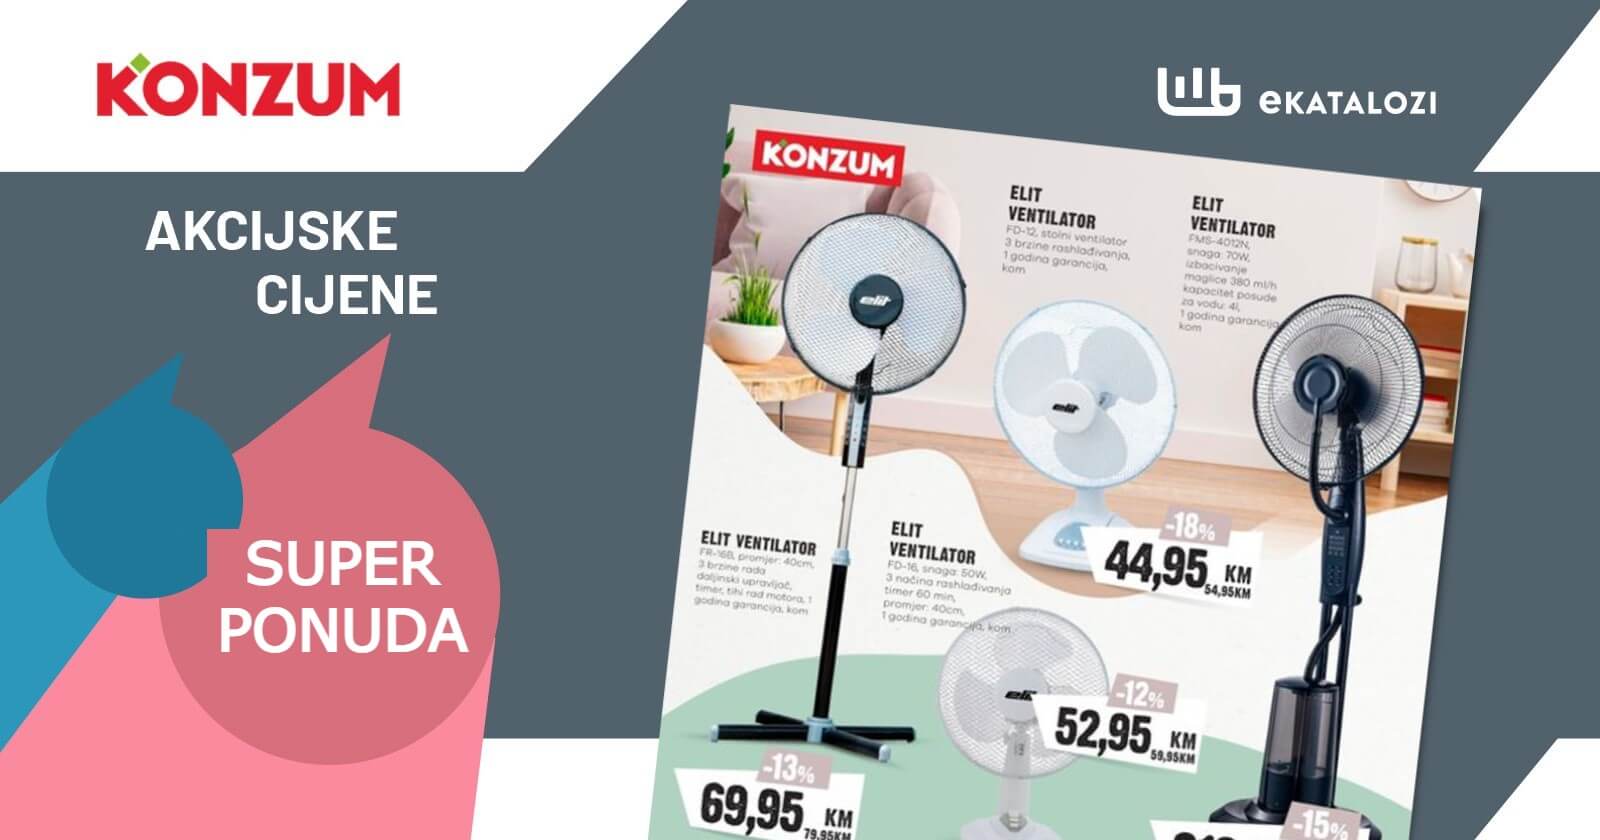 KONZUM Katalog Super ponuda ventilatora JUN JUL 2022 2